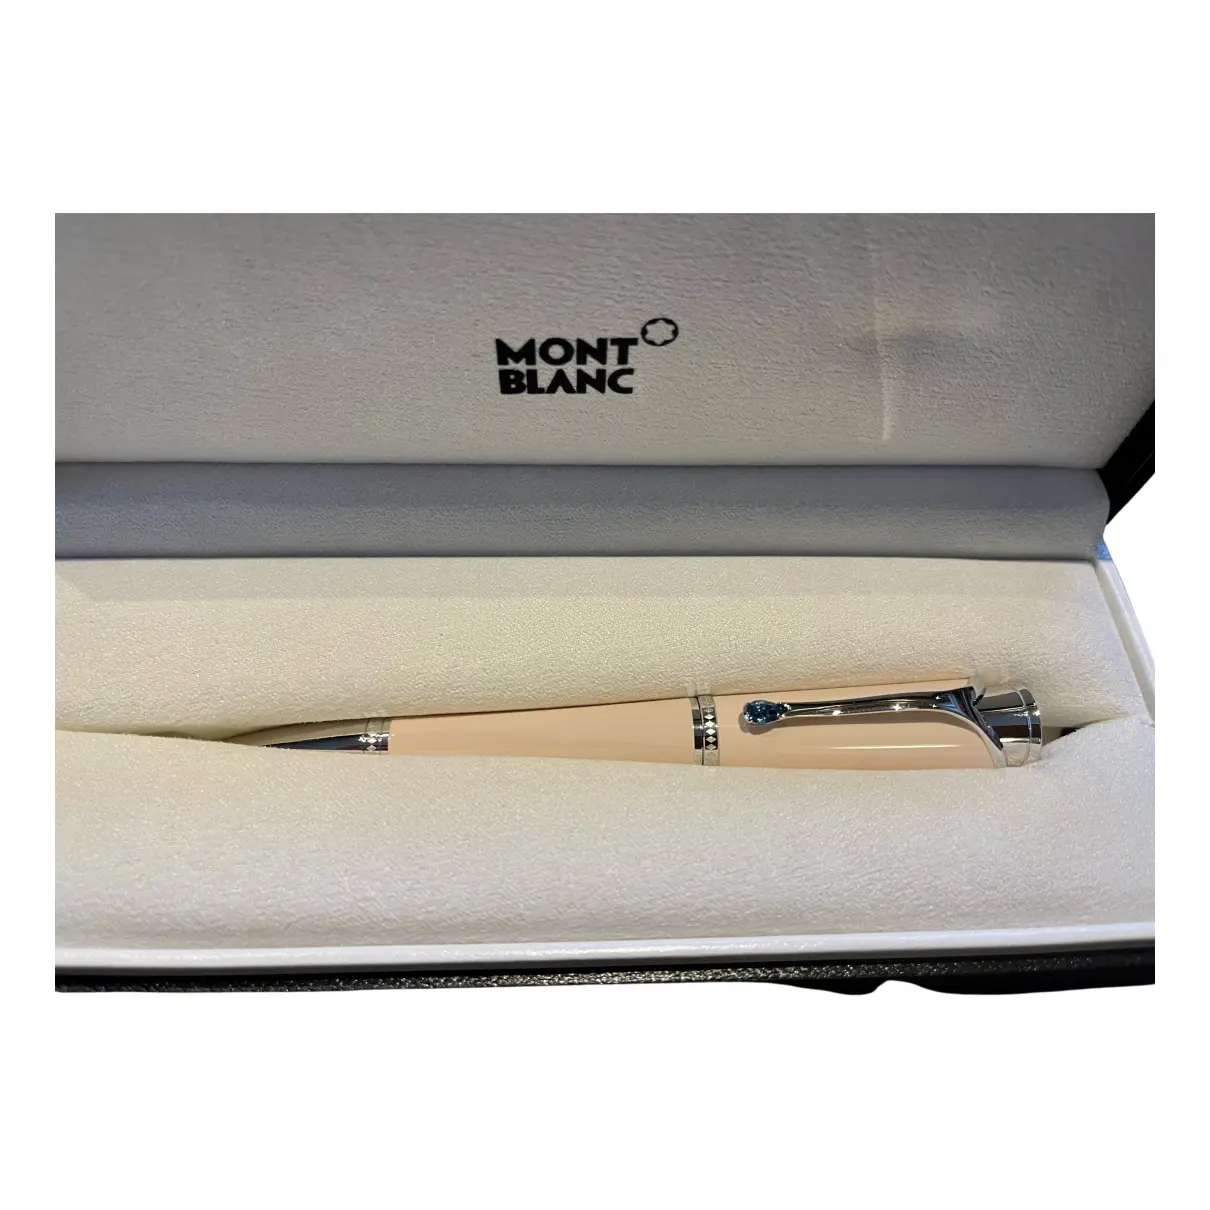 Buy Montblanc Pen online